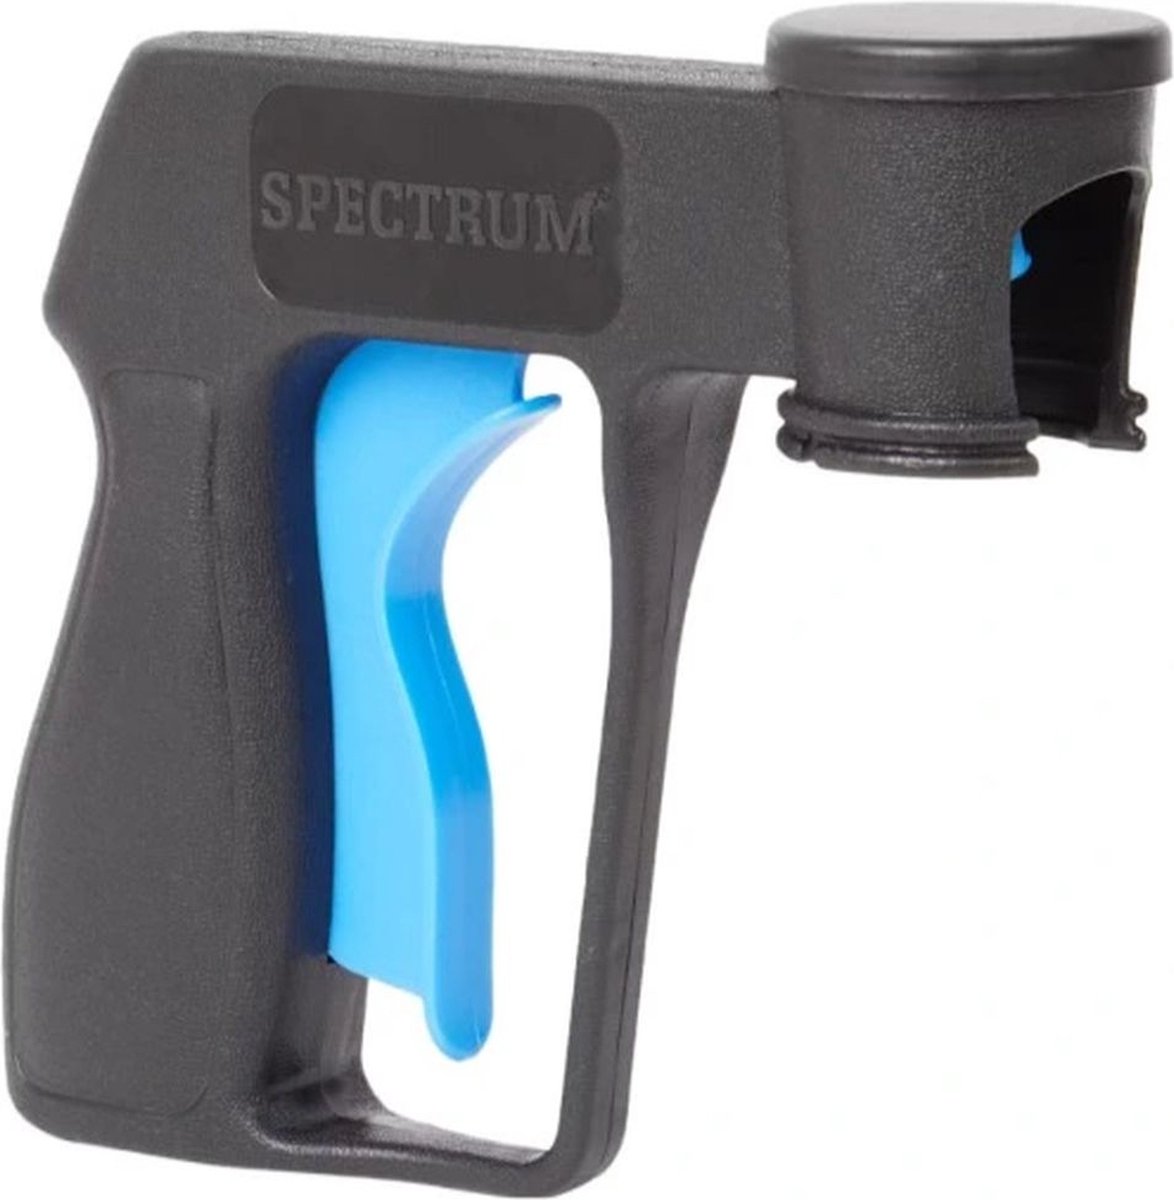 Verfspuitpistool Spectrum - Zwart / Blauw - Spray Can Gun - Verf Spuitbus Pistool